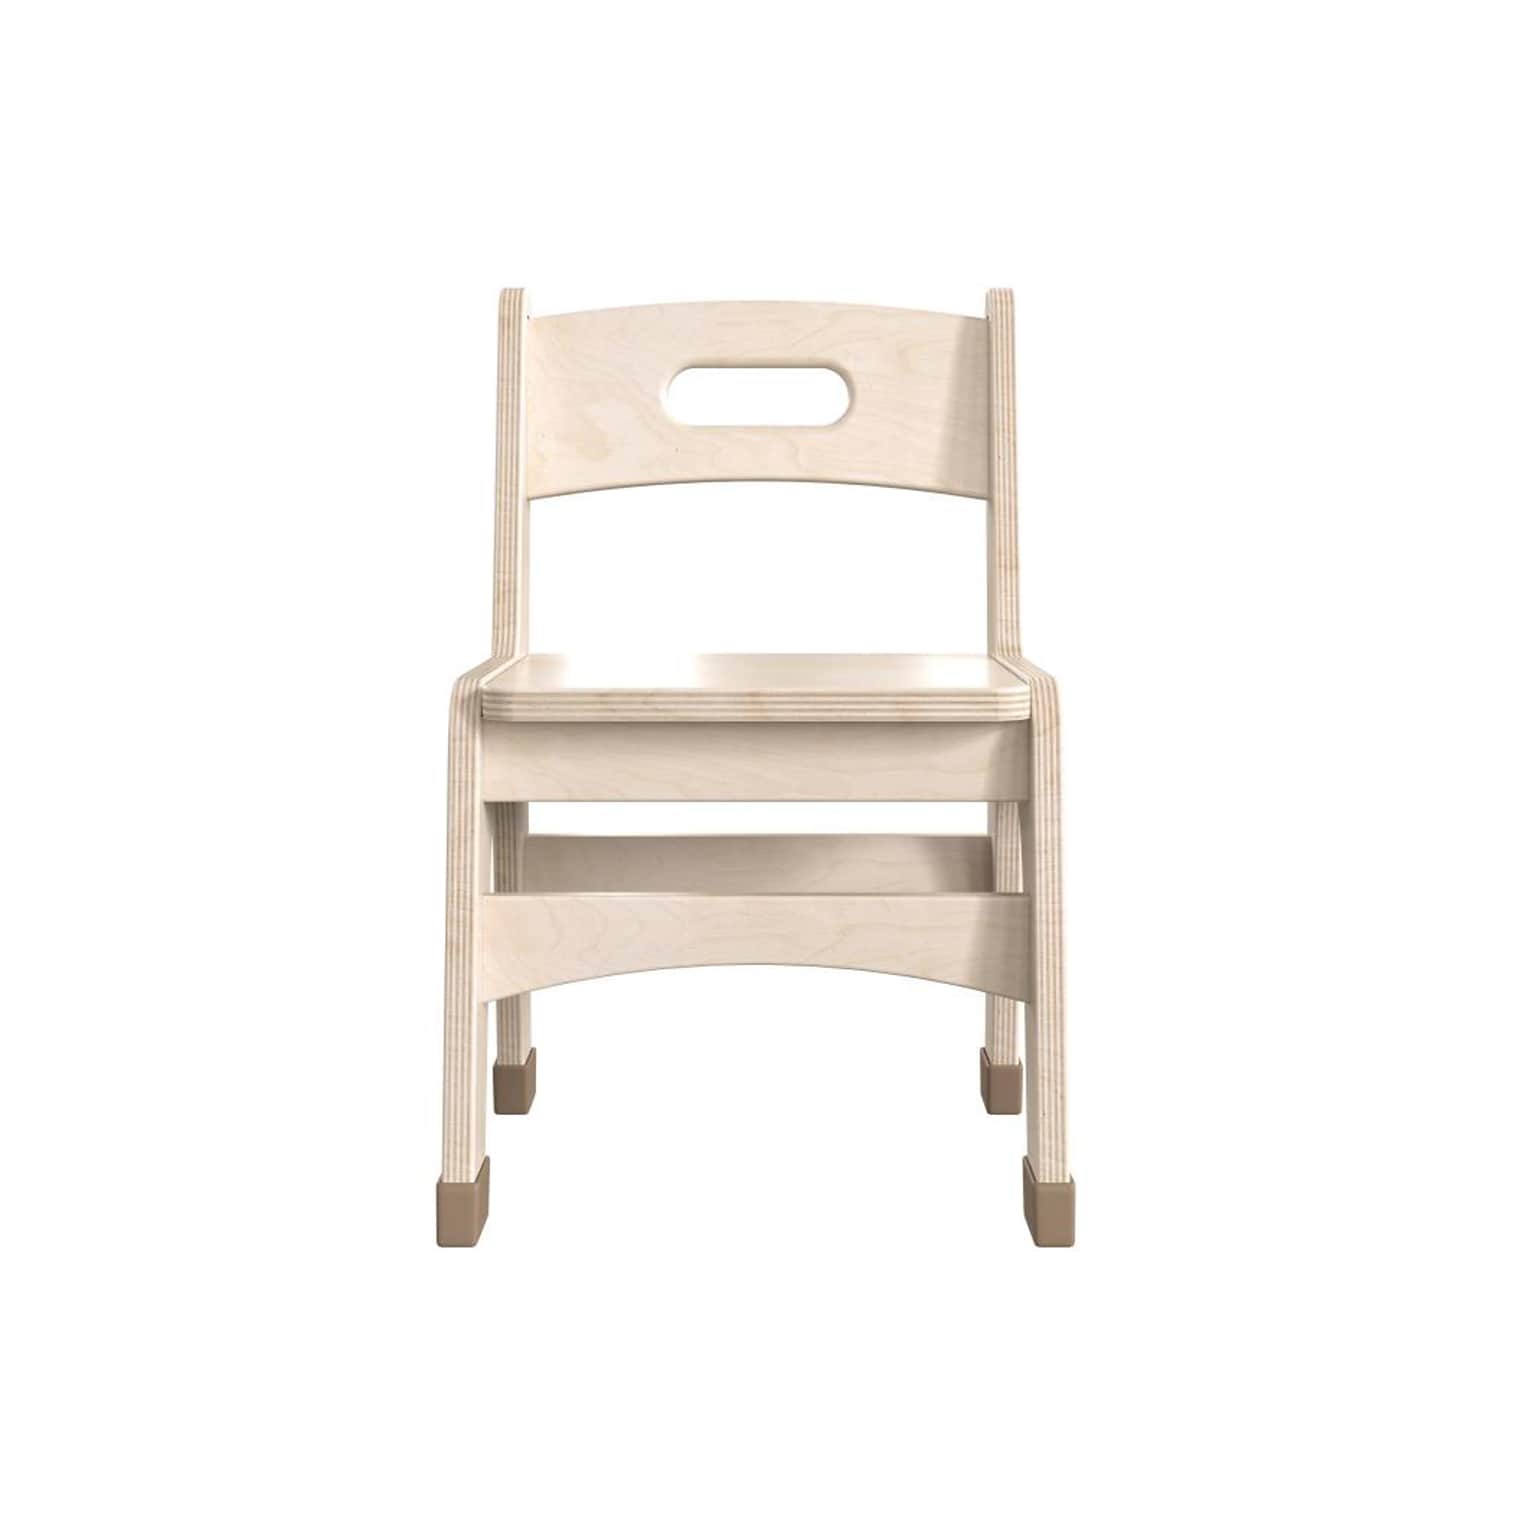 Flash Furniture Bright Beginnings Wooden Classroom Chair, Brown, 2 Pieces/Set (MK-KE24435-GG)